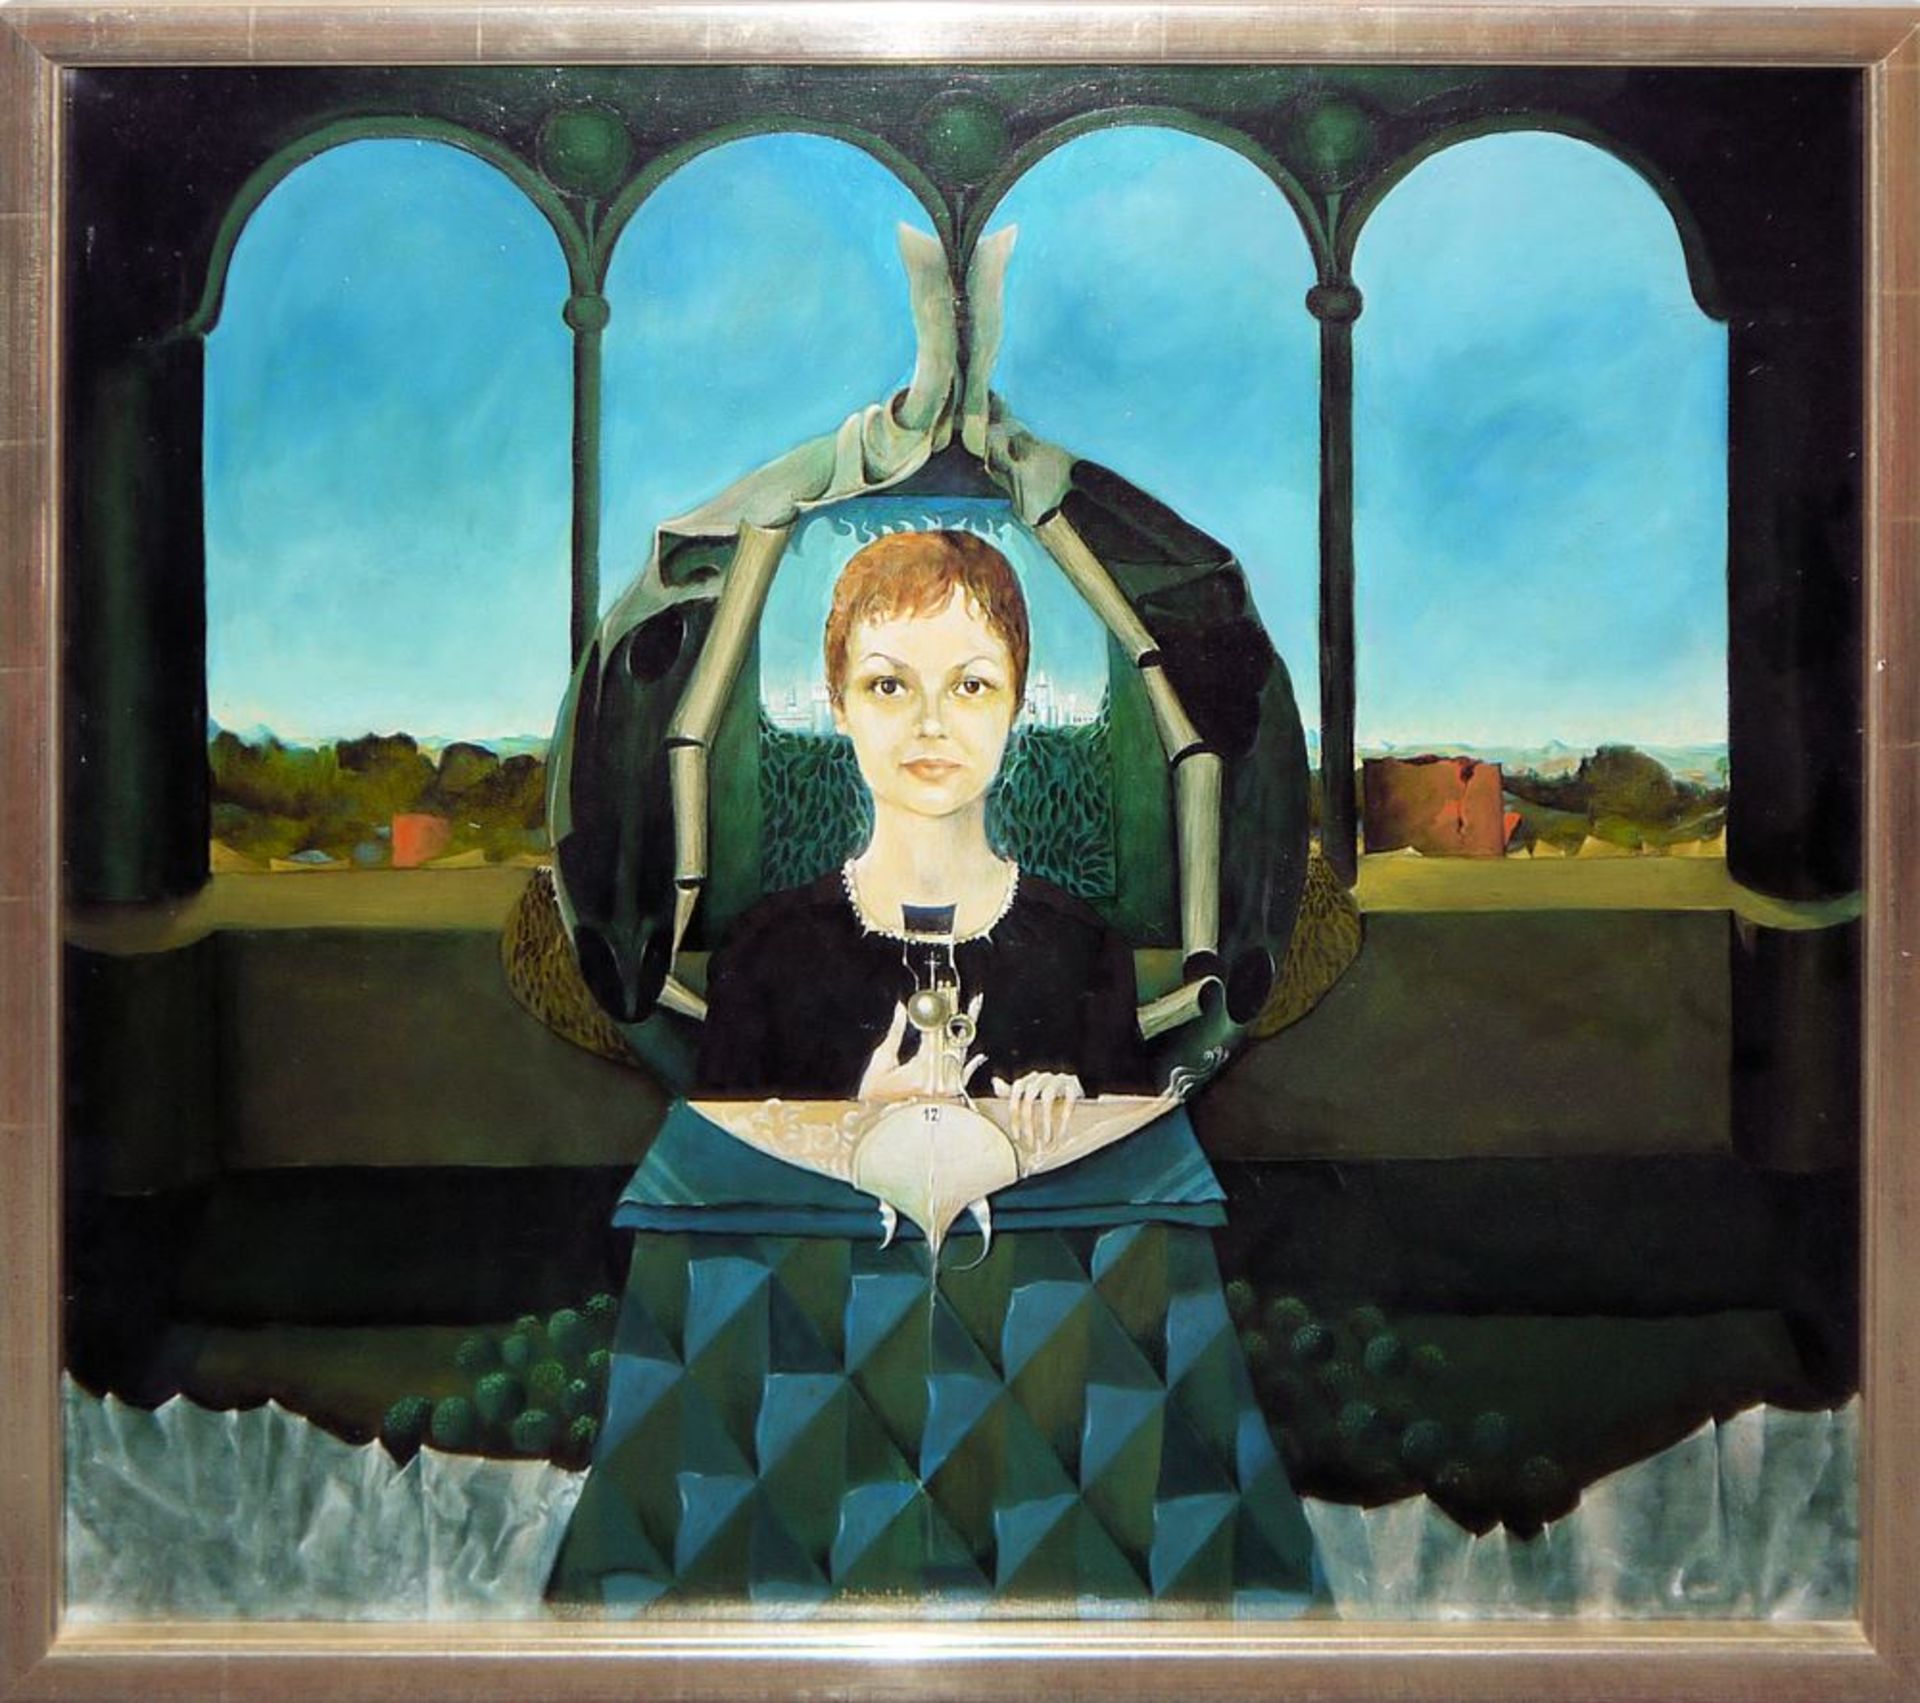 Joe Hackbarth, "Maria", surreal-fantastic oil painting 1966/70, framed, with the monograph "Joe Hac - Image 2 of 5